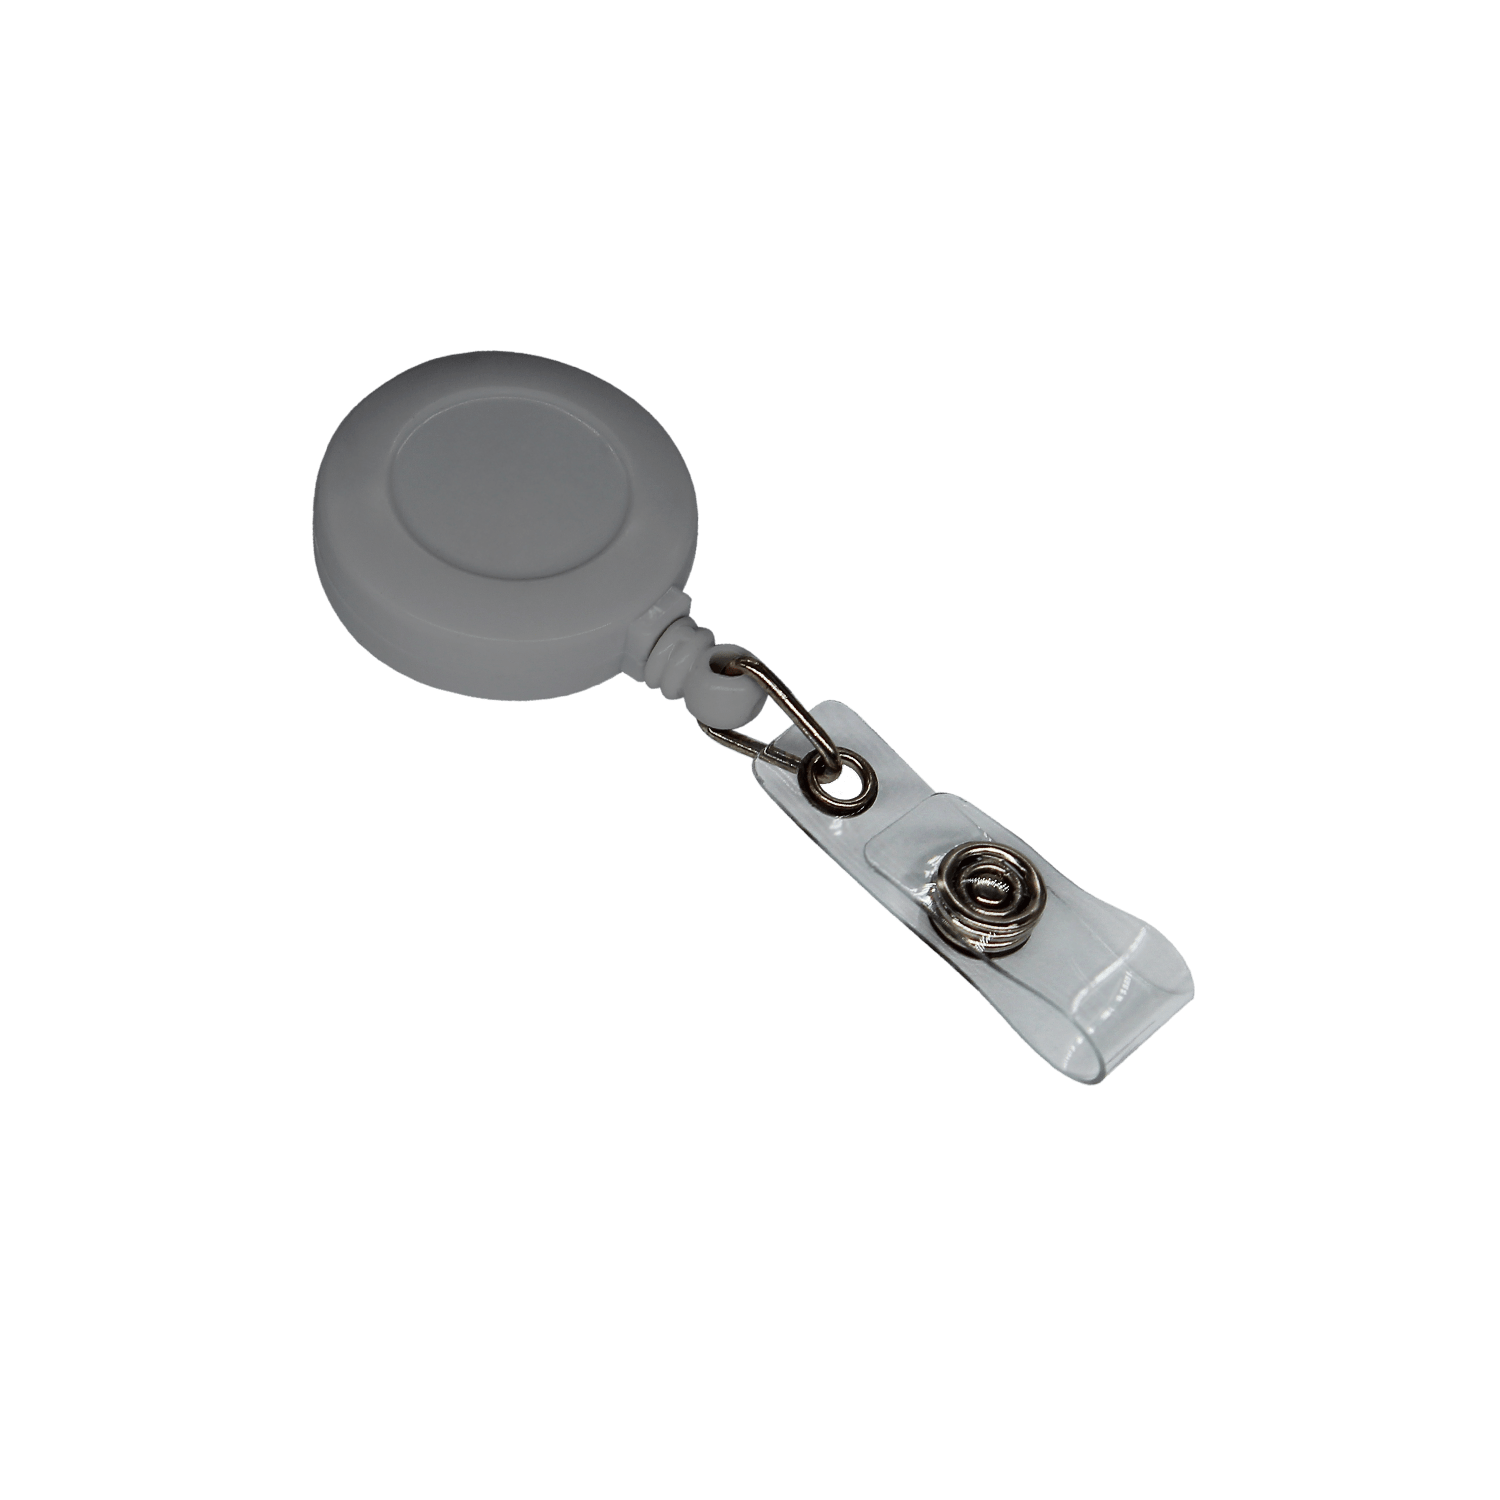 Ретрактор 4hand (серый), серый, металл